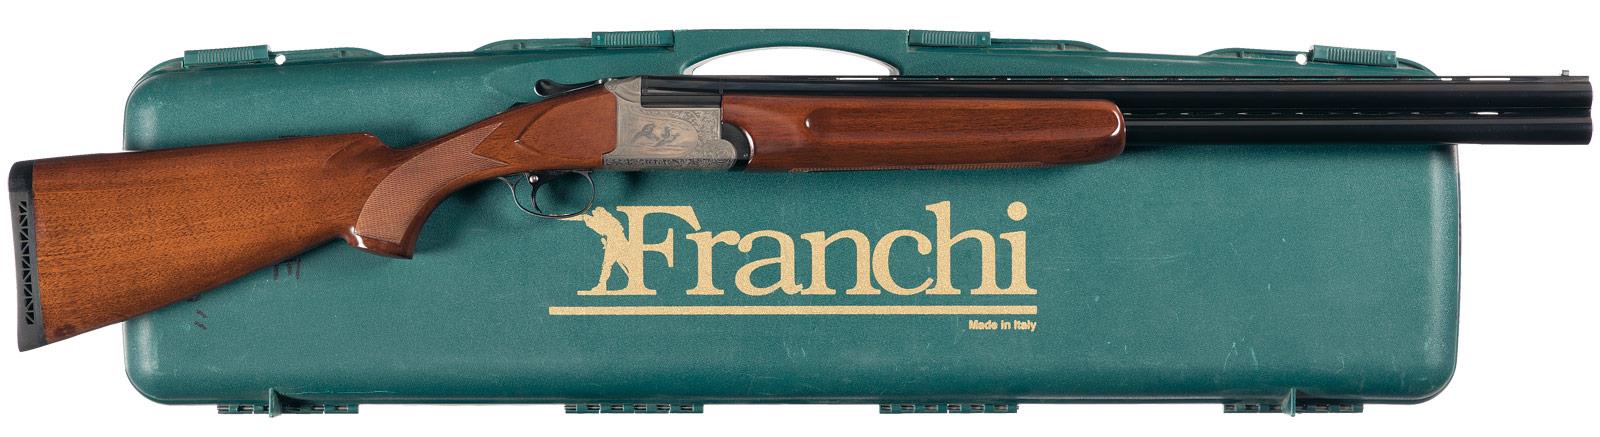 franchi-alcione-field-model-over-under-shotgun-with-hard-case-rock